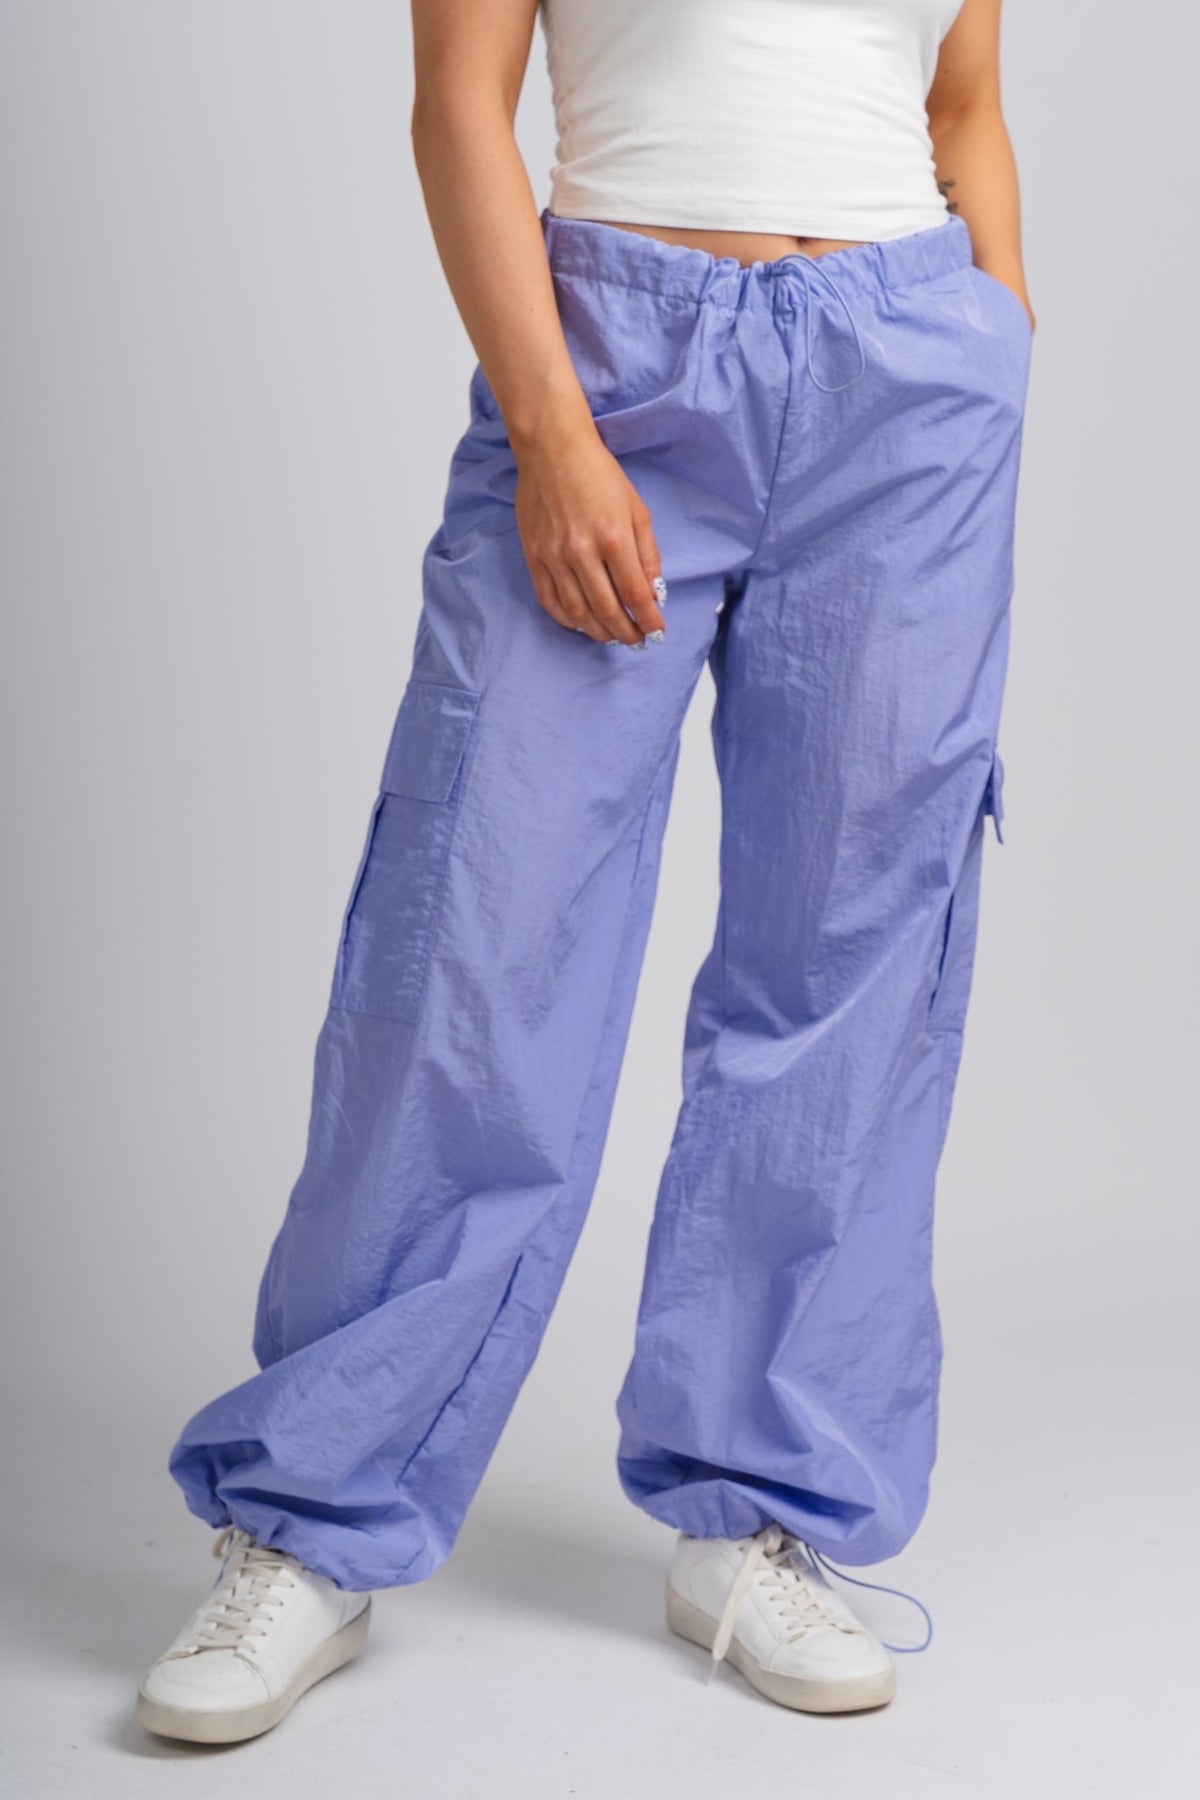 Nylon parachute pants pastel indigo - Stylish Pants - Cute Easter Outfits at Lush Fashion Lounge Boutique in Oklahoma